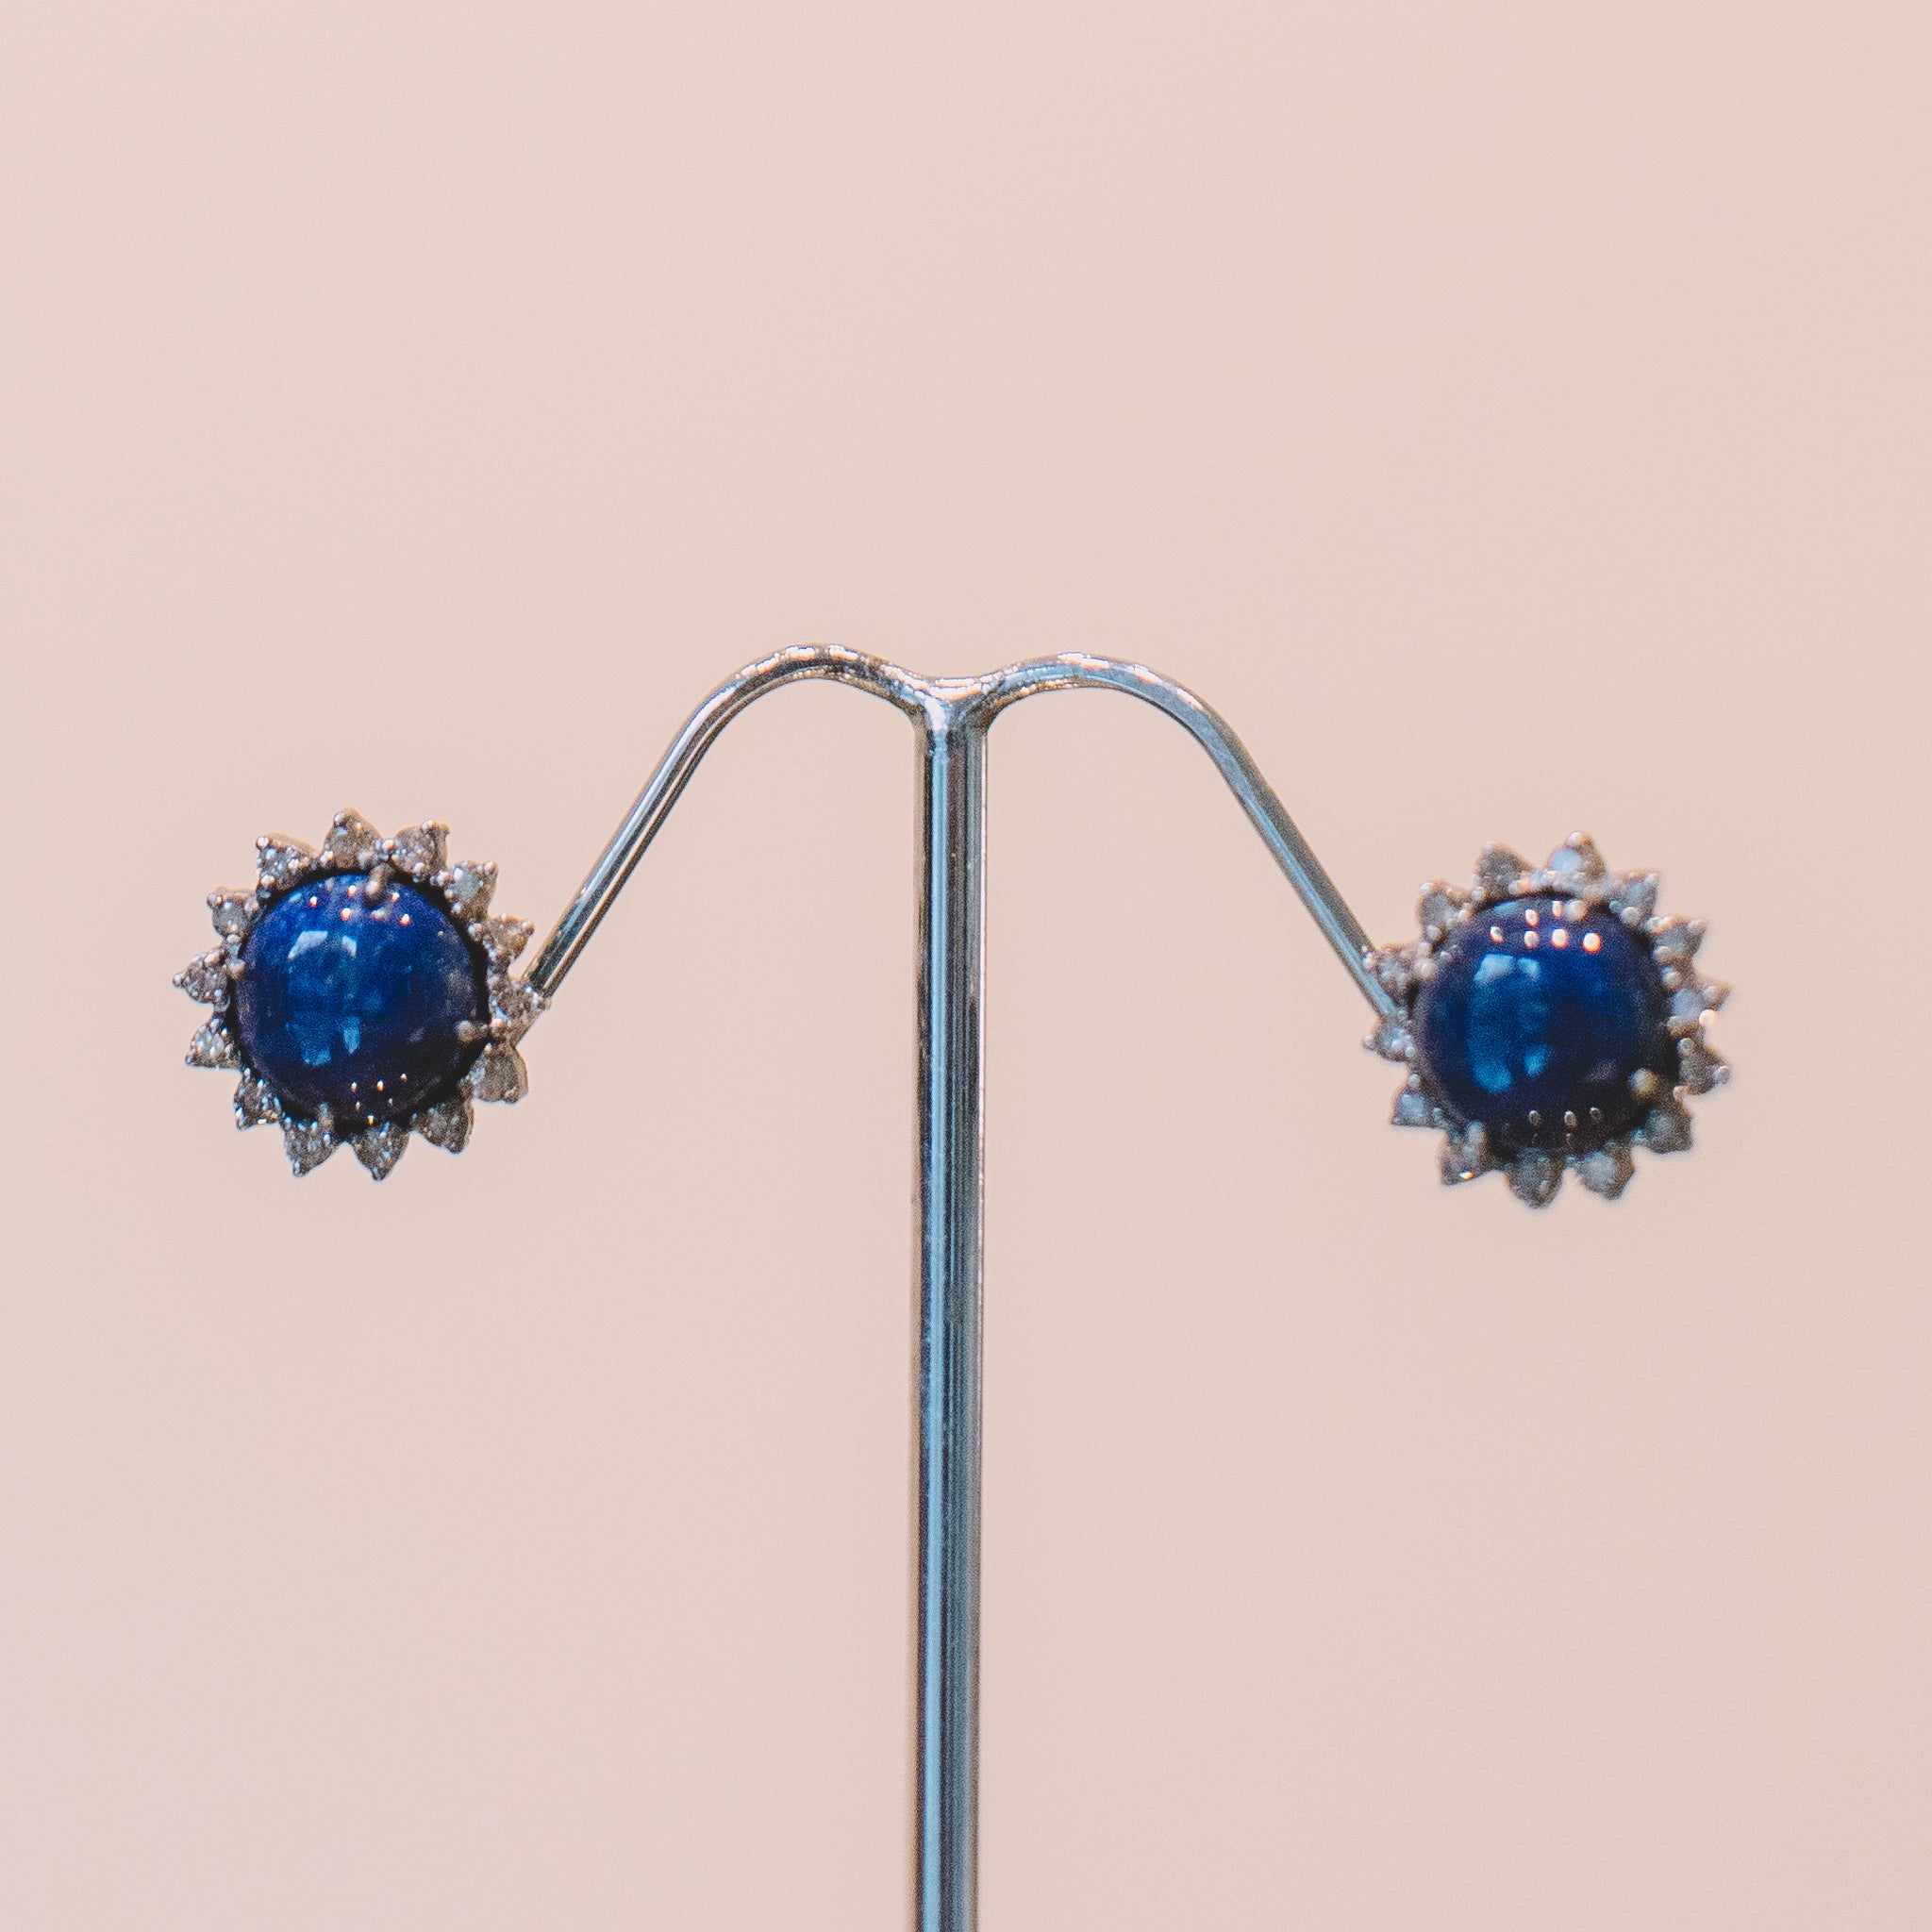 Lapis Lazuli with Diamond Studs set in Silver